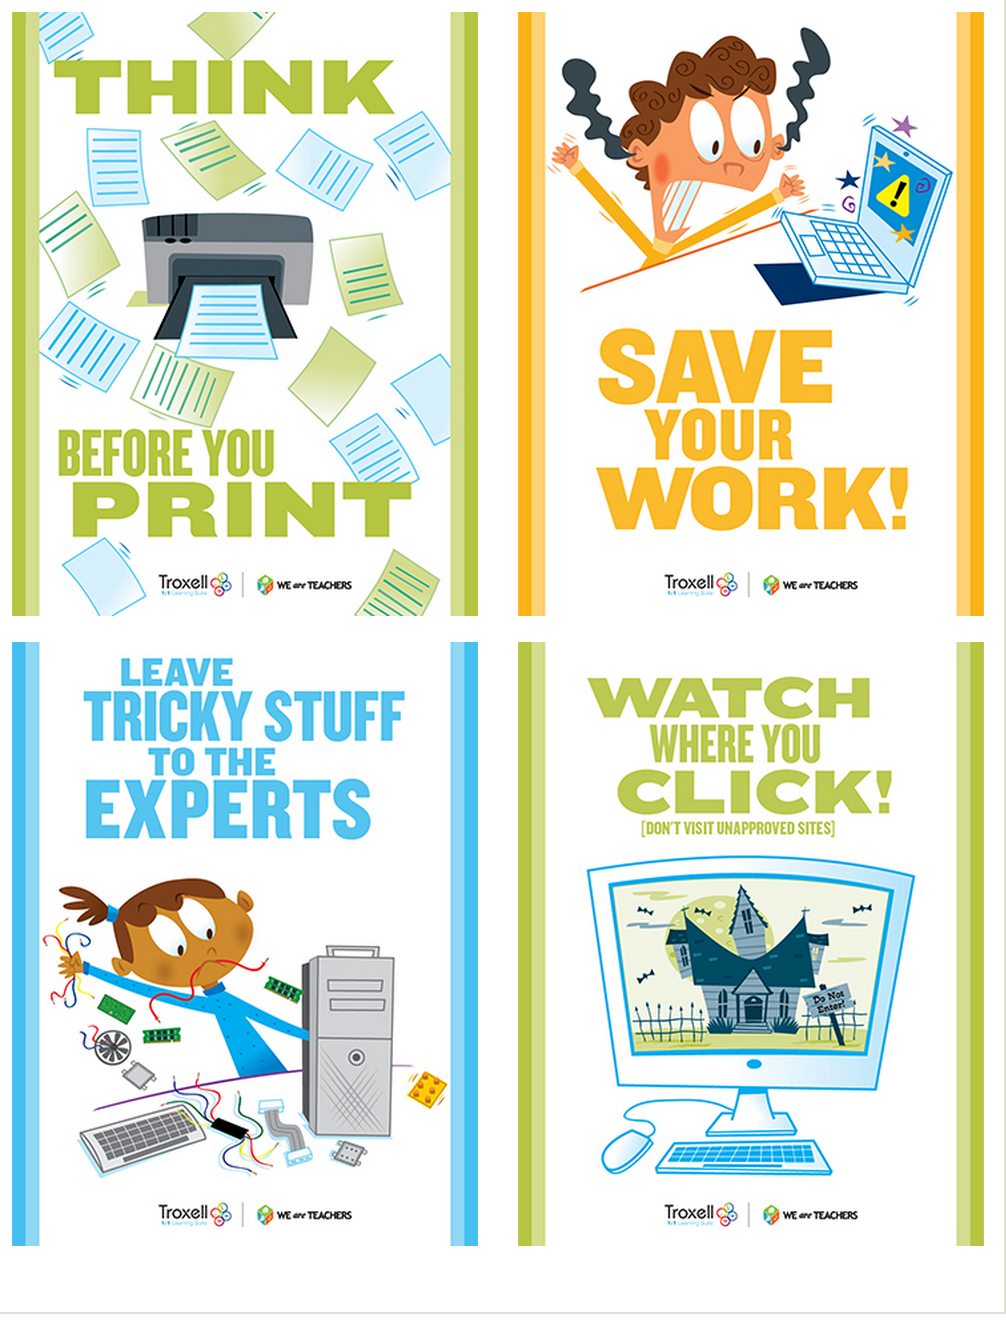 free-printable-computer-lab-posters-gerald-printable